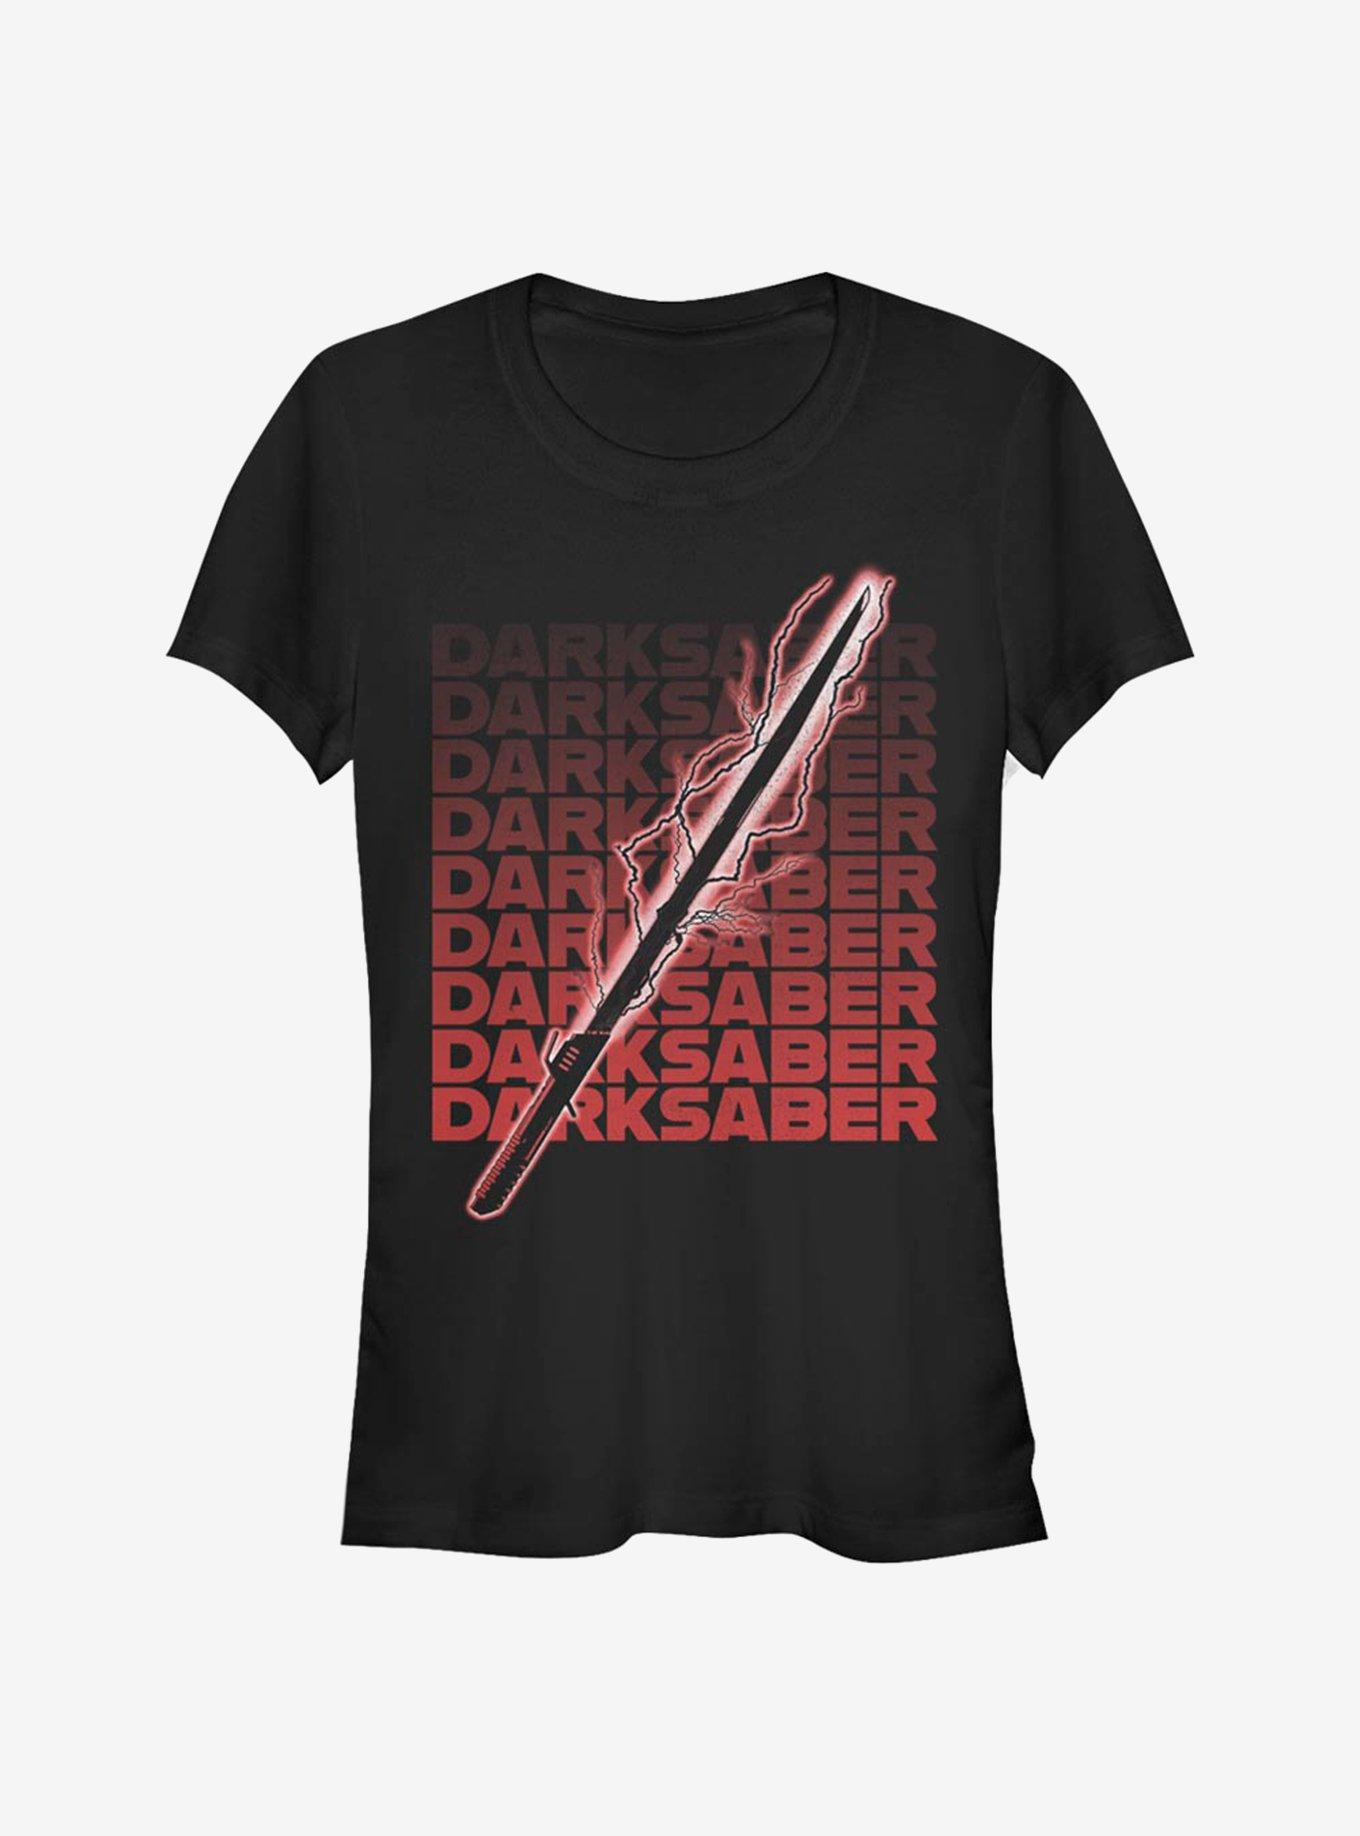 Star Wars The Mandalorian Darksaber Text Girls T-Shirt